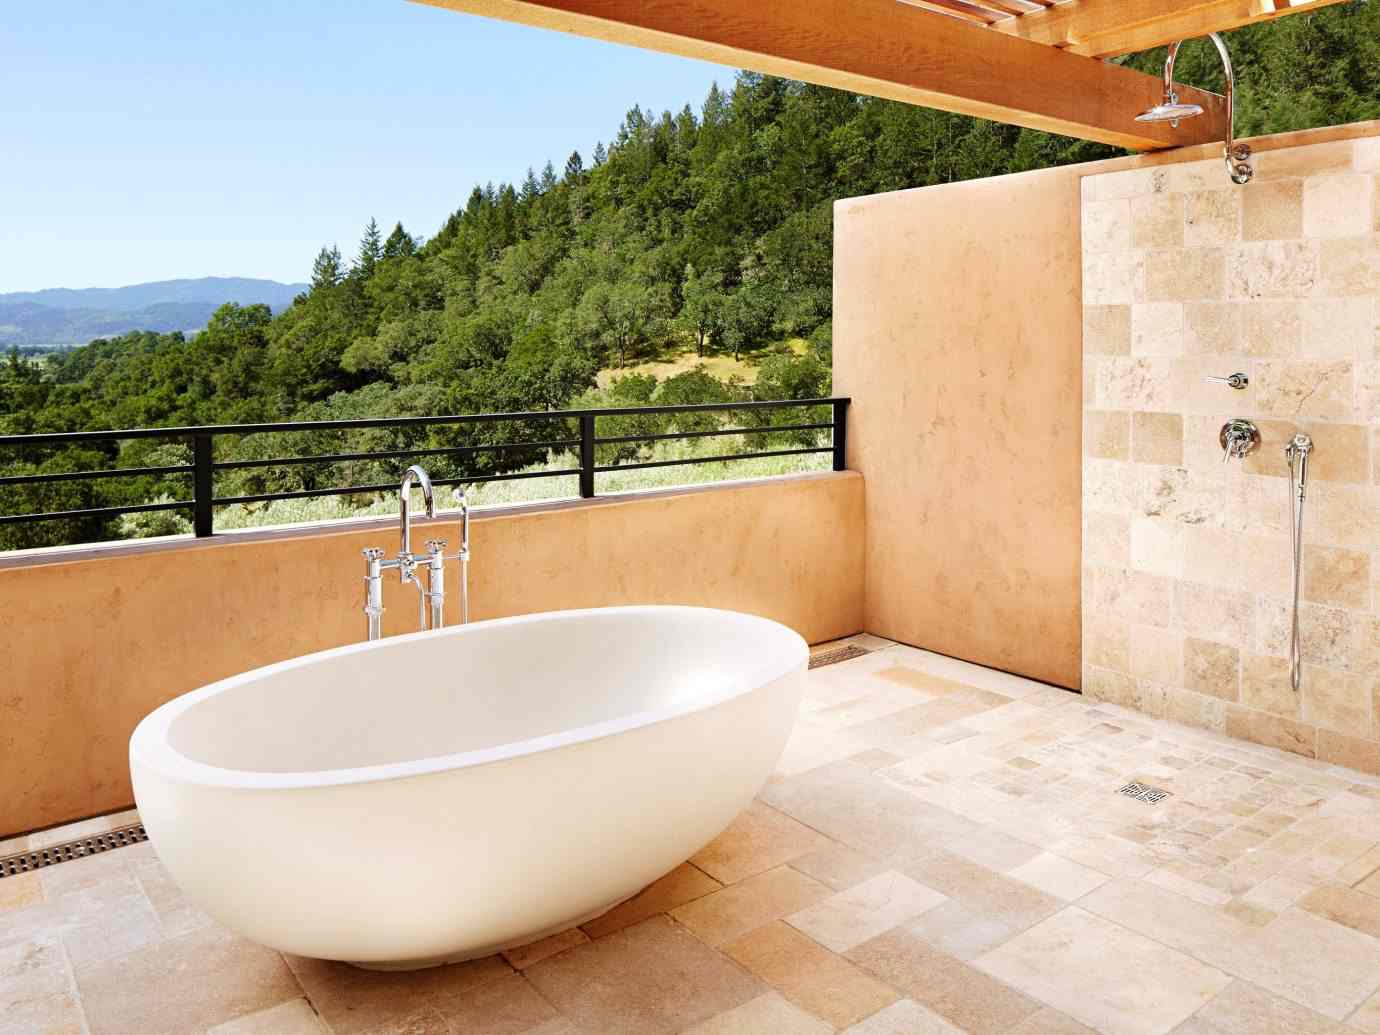 Rain shower oval bathtub plasterboard roofing wood pergola sun protection